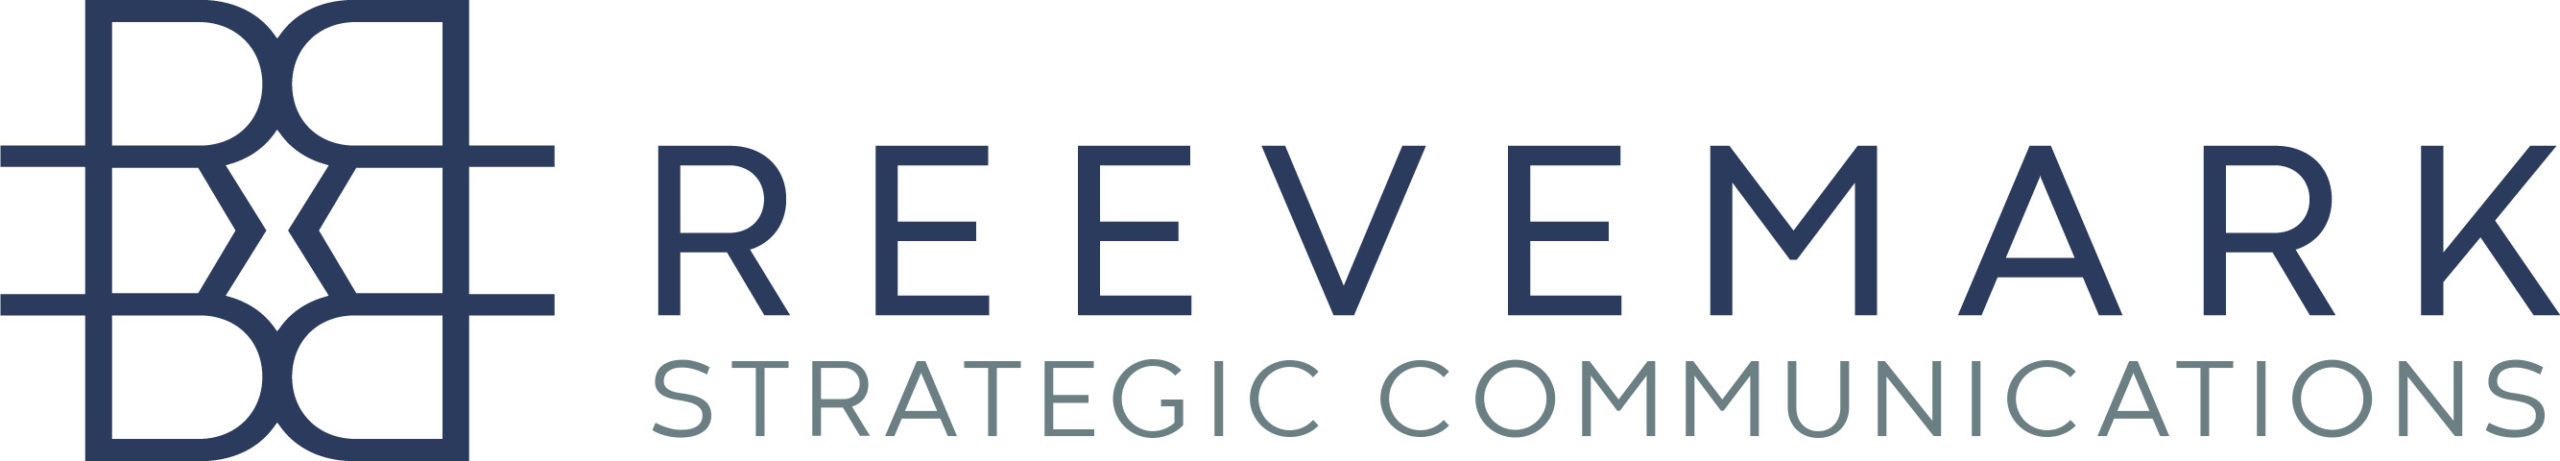 Reevemark logo